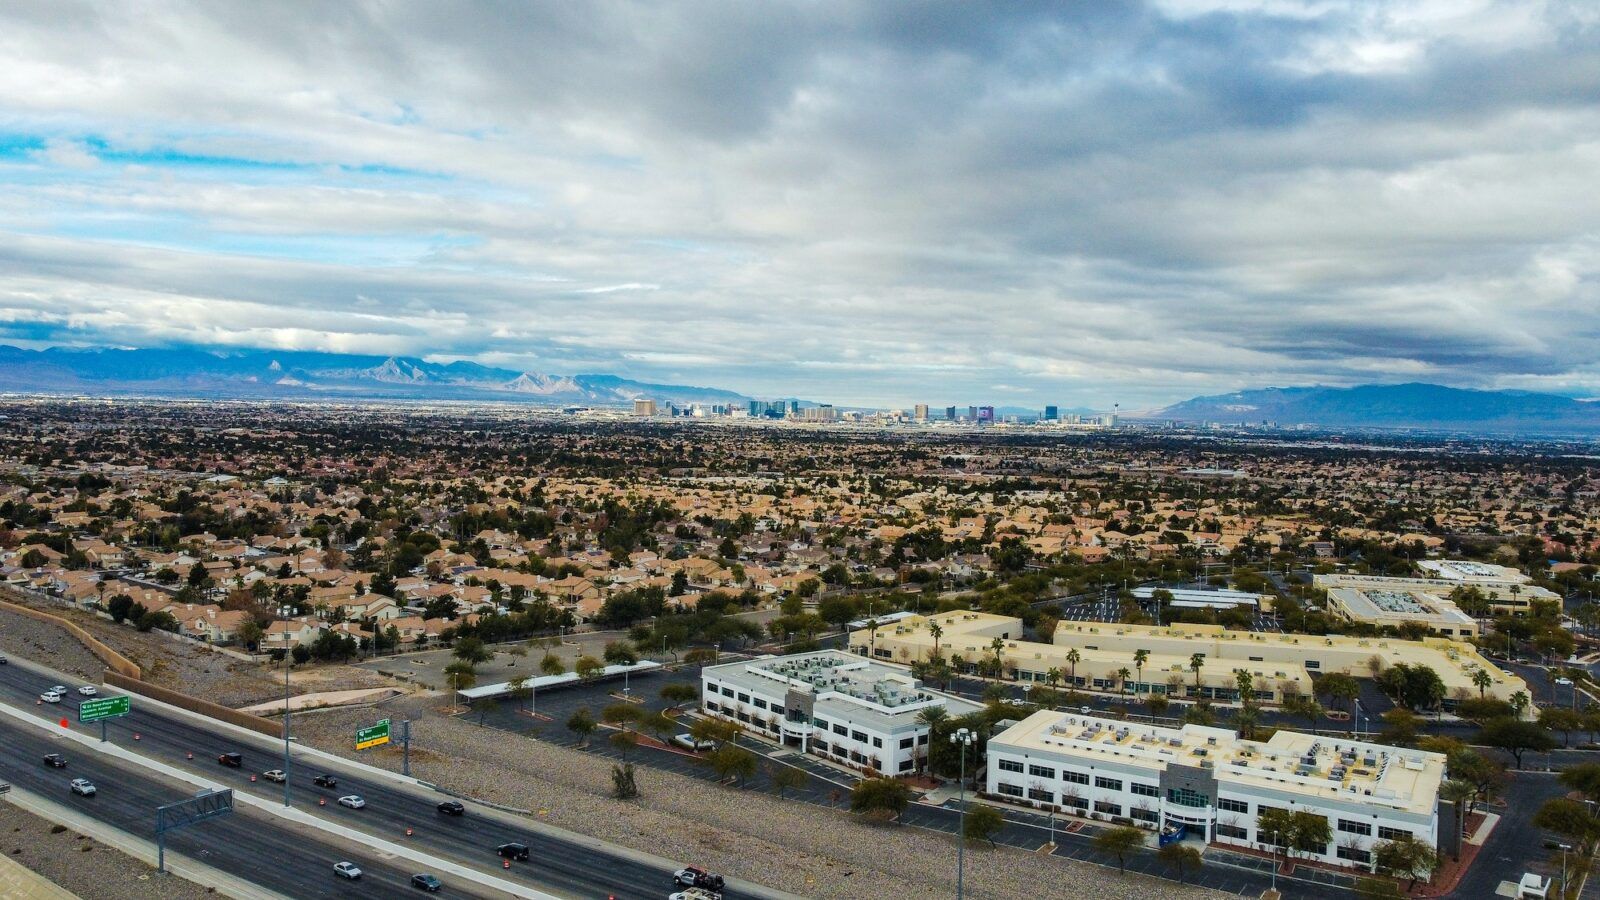 Las Vegas skyline above the city of Henderson, Nevada during daylight